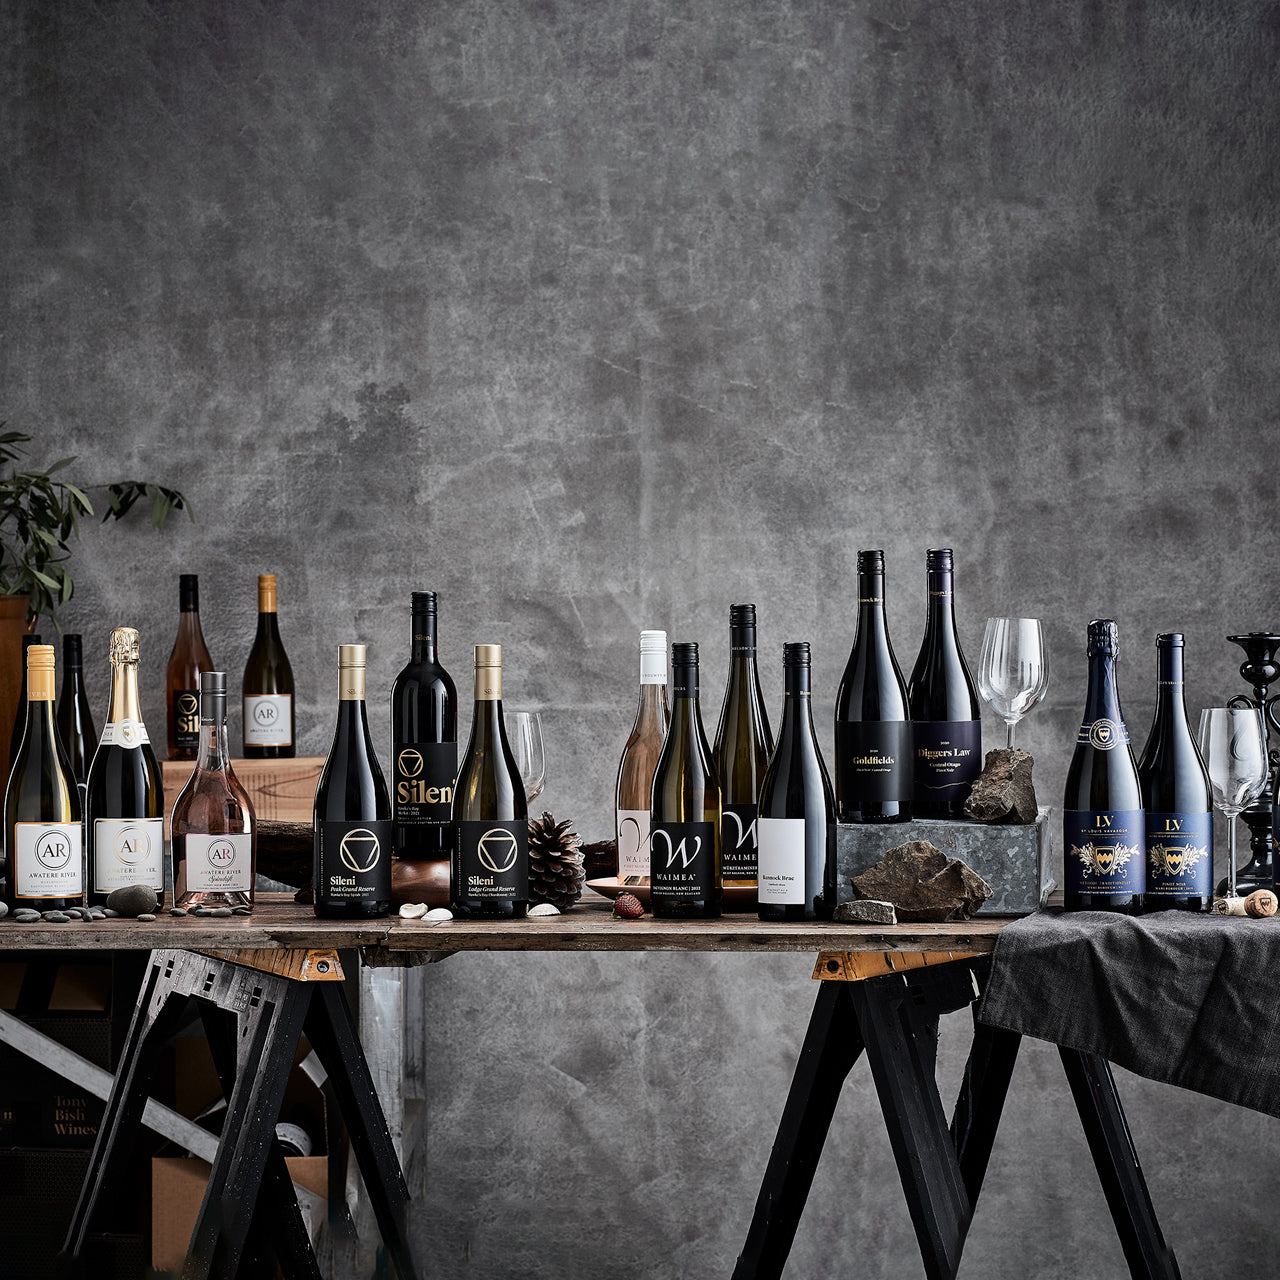 Gravity Cellars family of wines